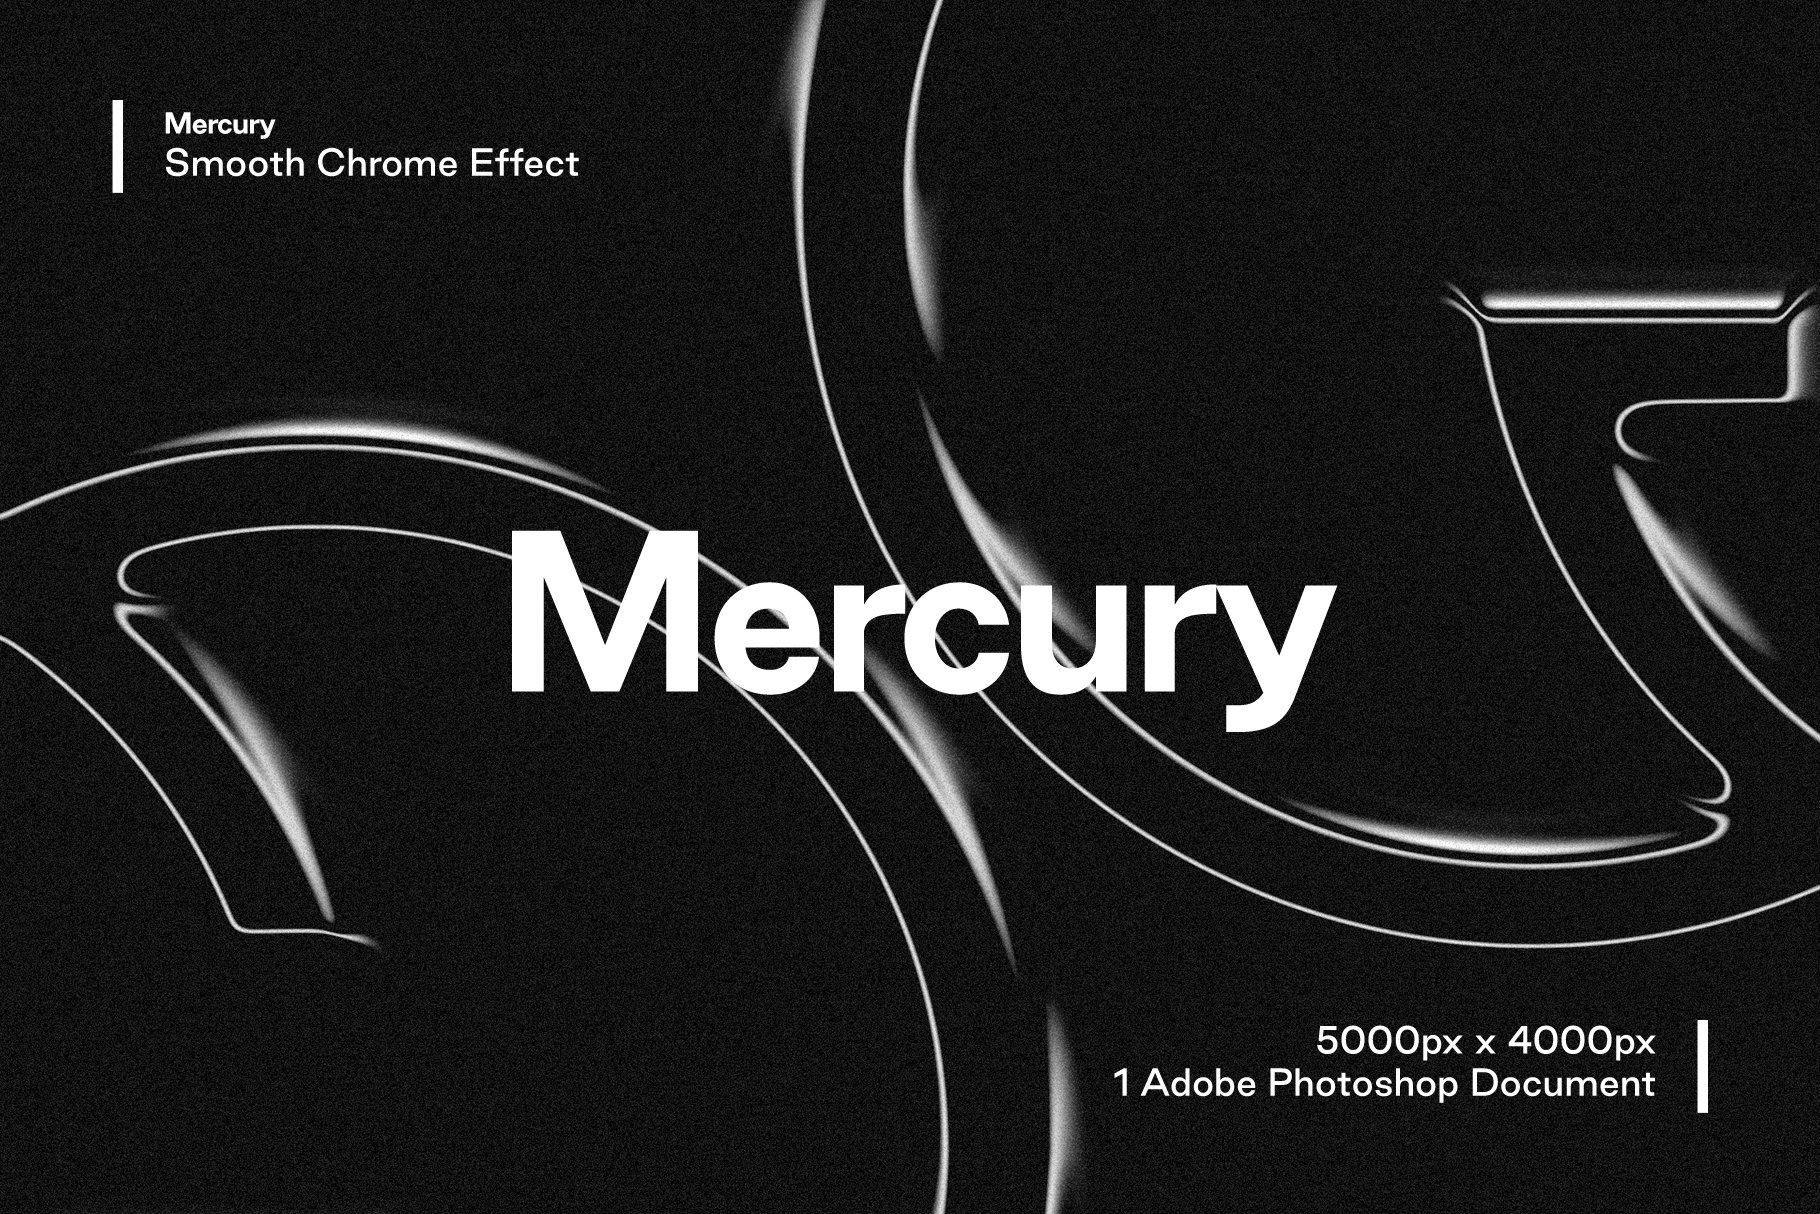 Mercury - Smooth Chrome Effectcover image.